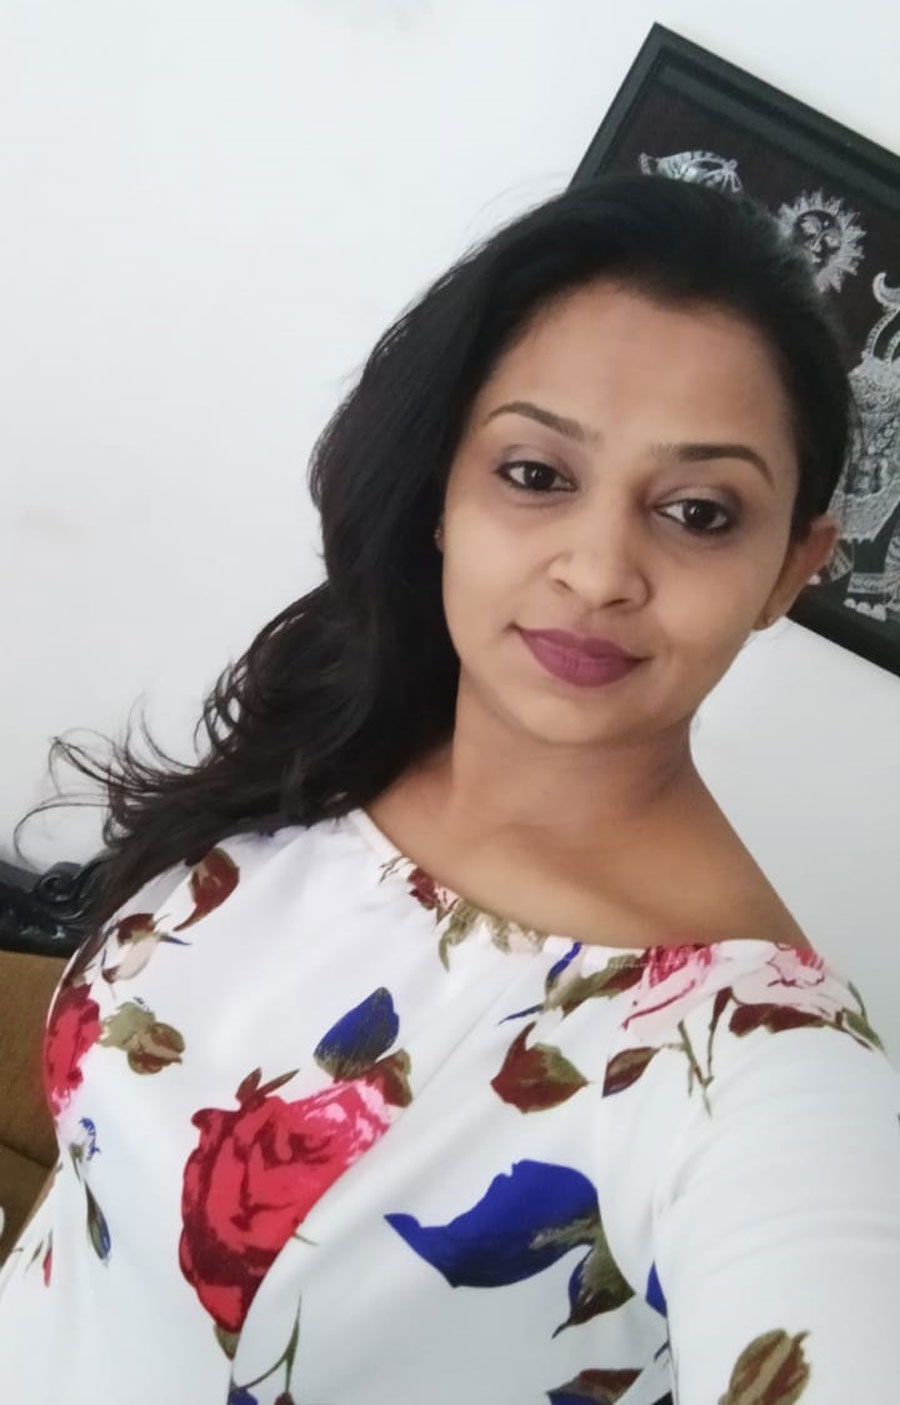 Chalanika Thilakshi Thirikawala